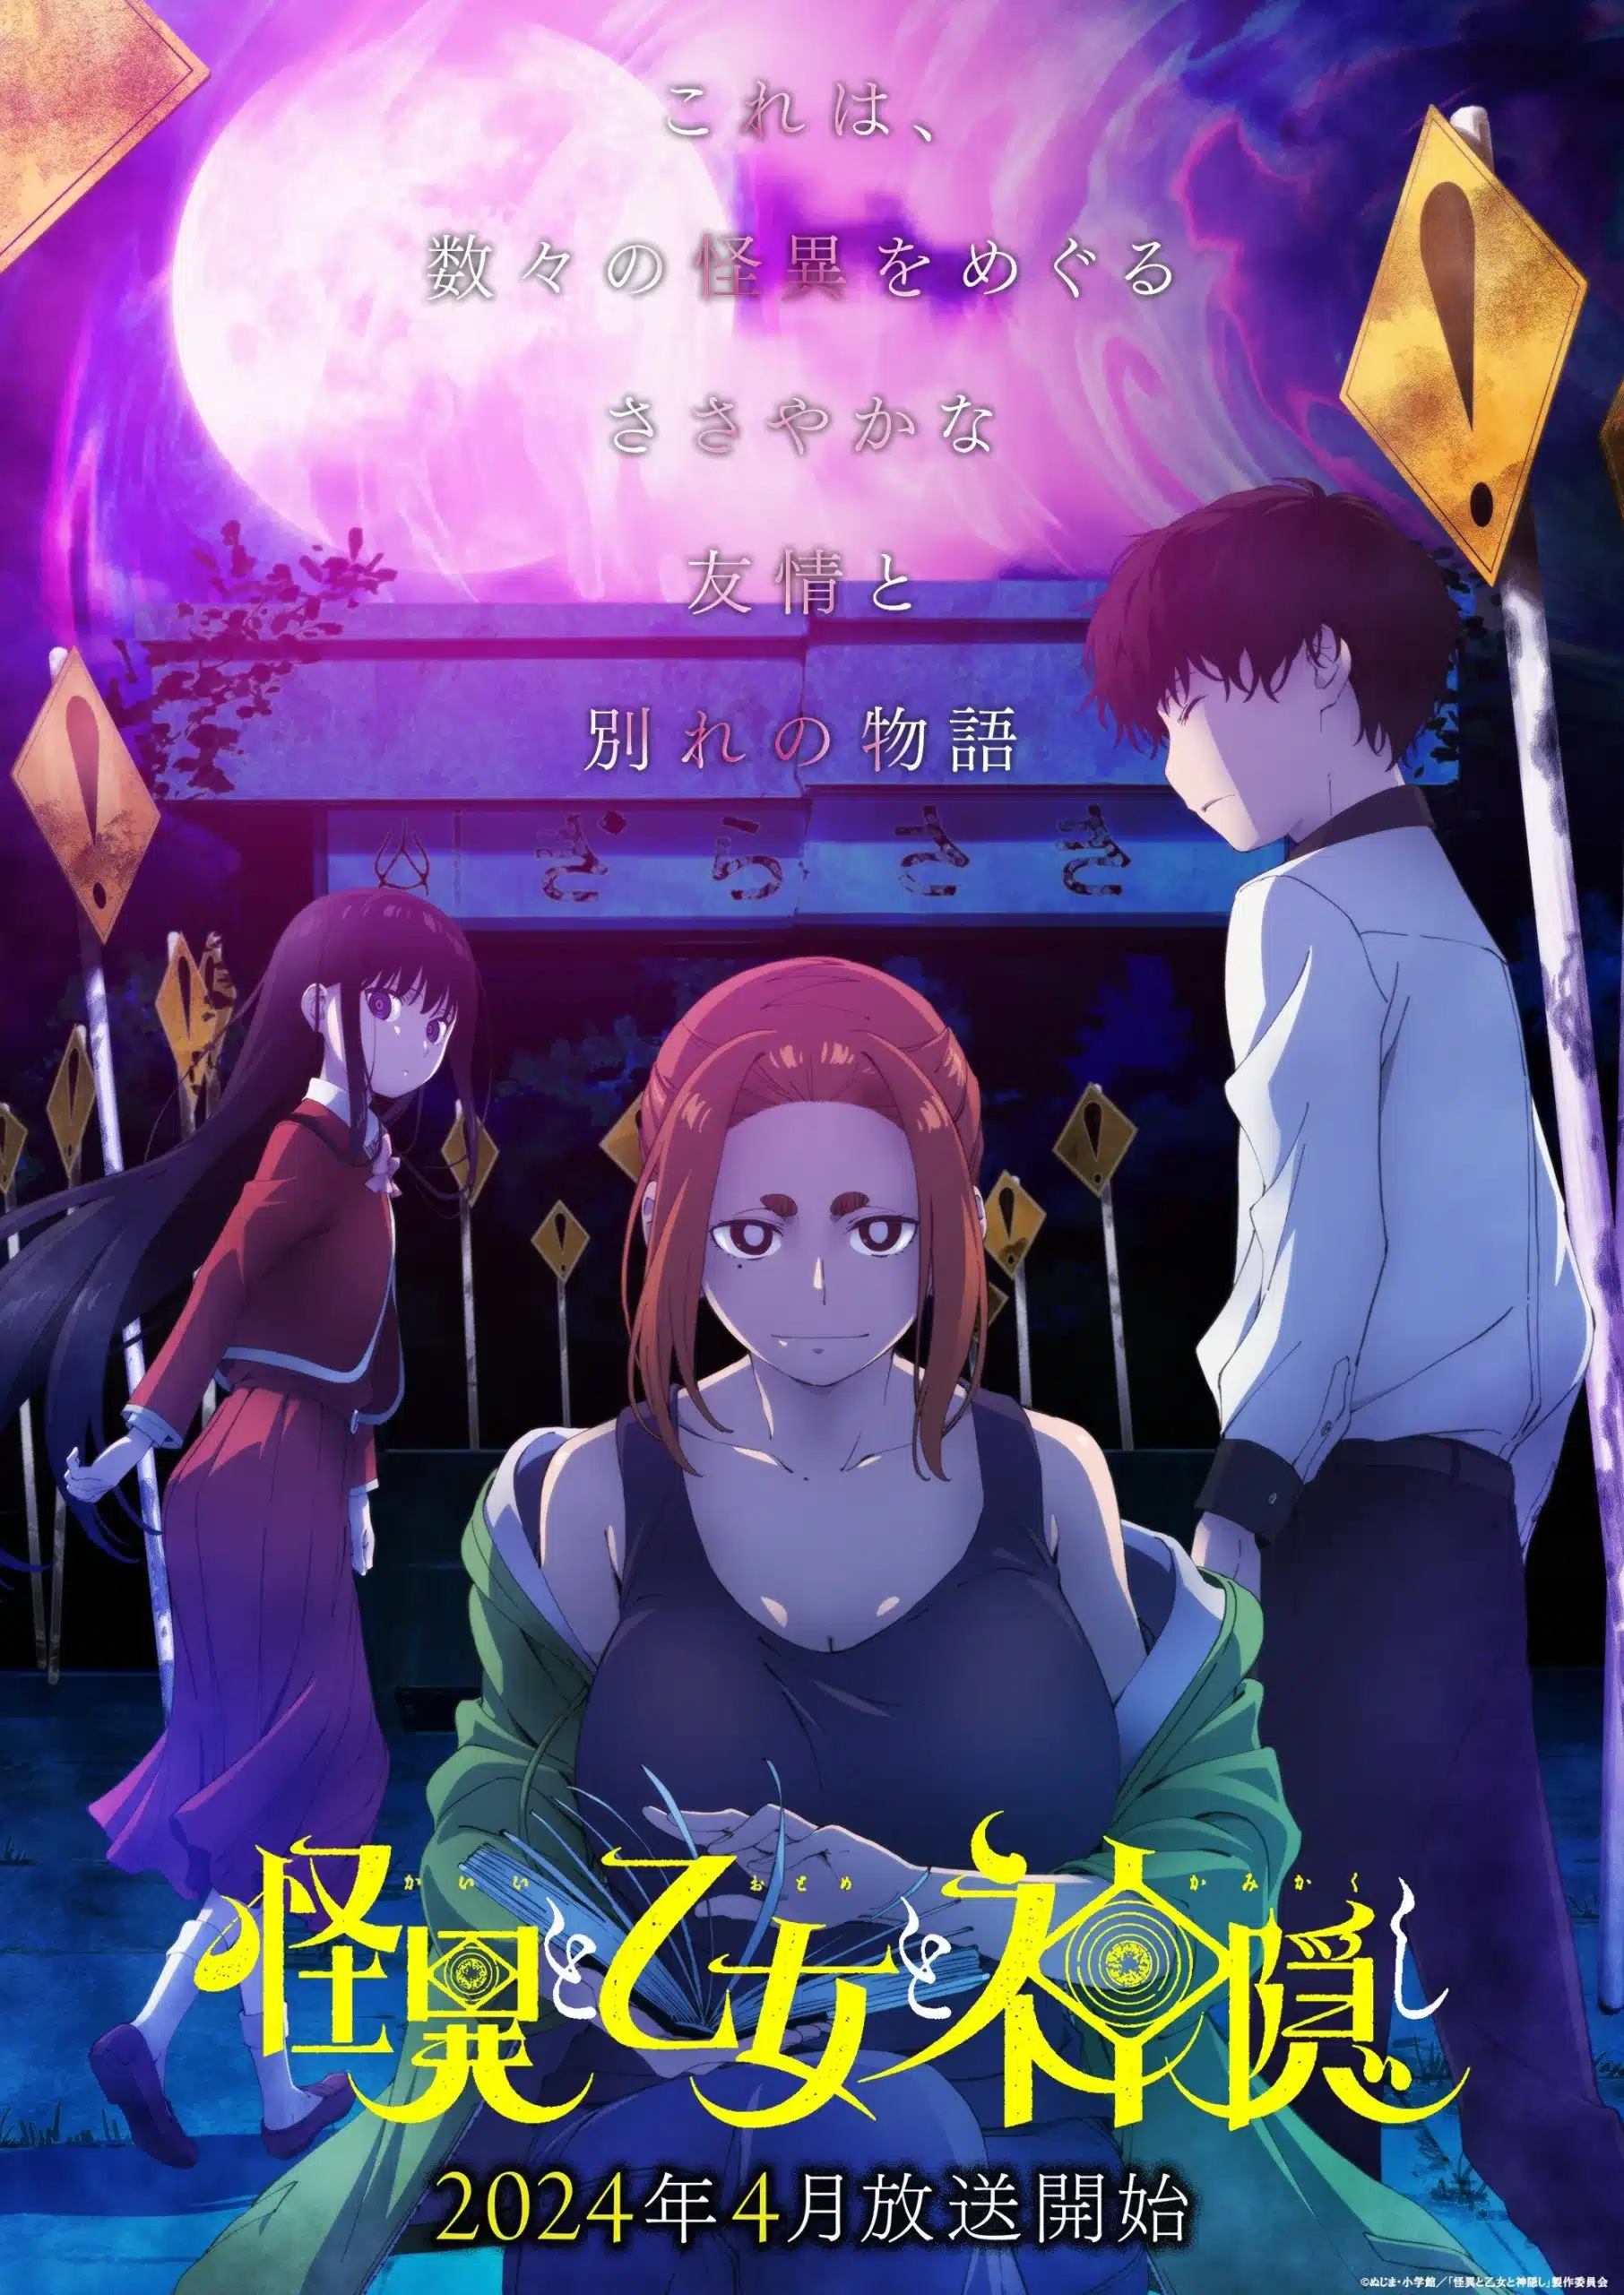 Animes – Temporada de primavera 2014 – OTSS! – 社交オタク!